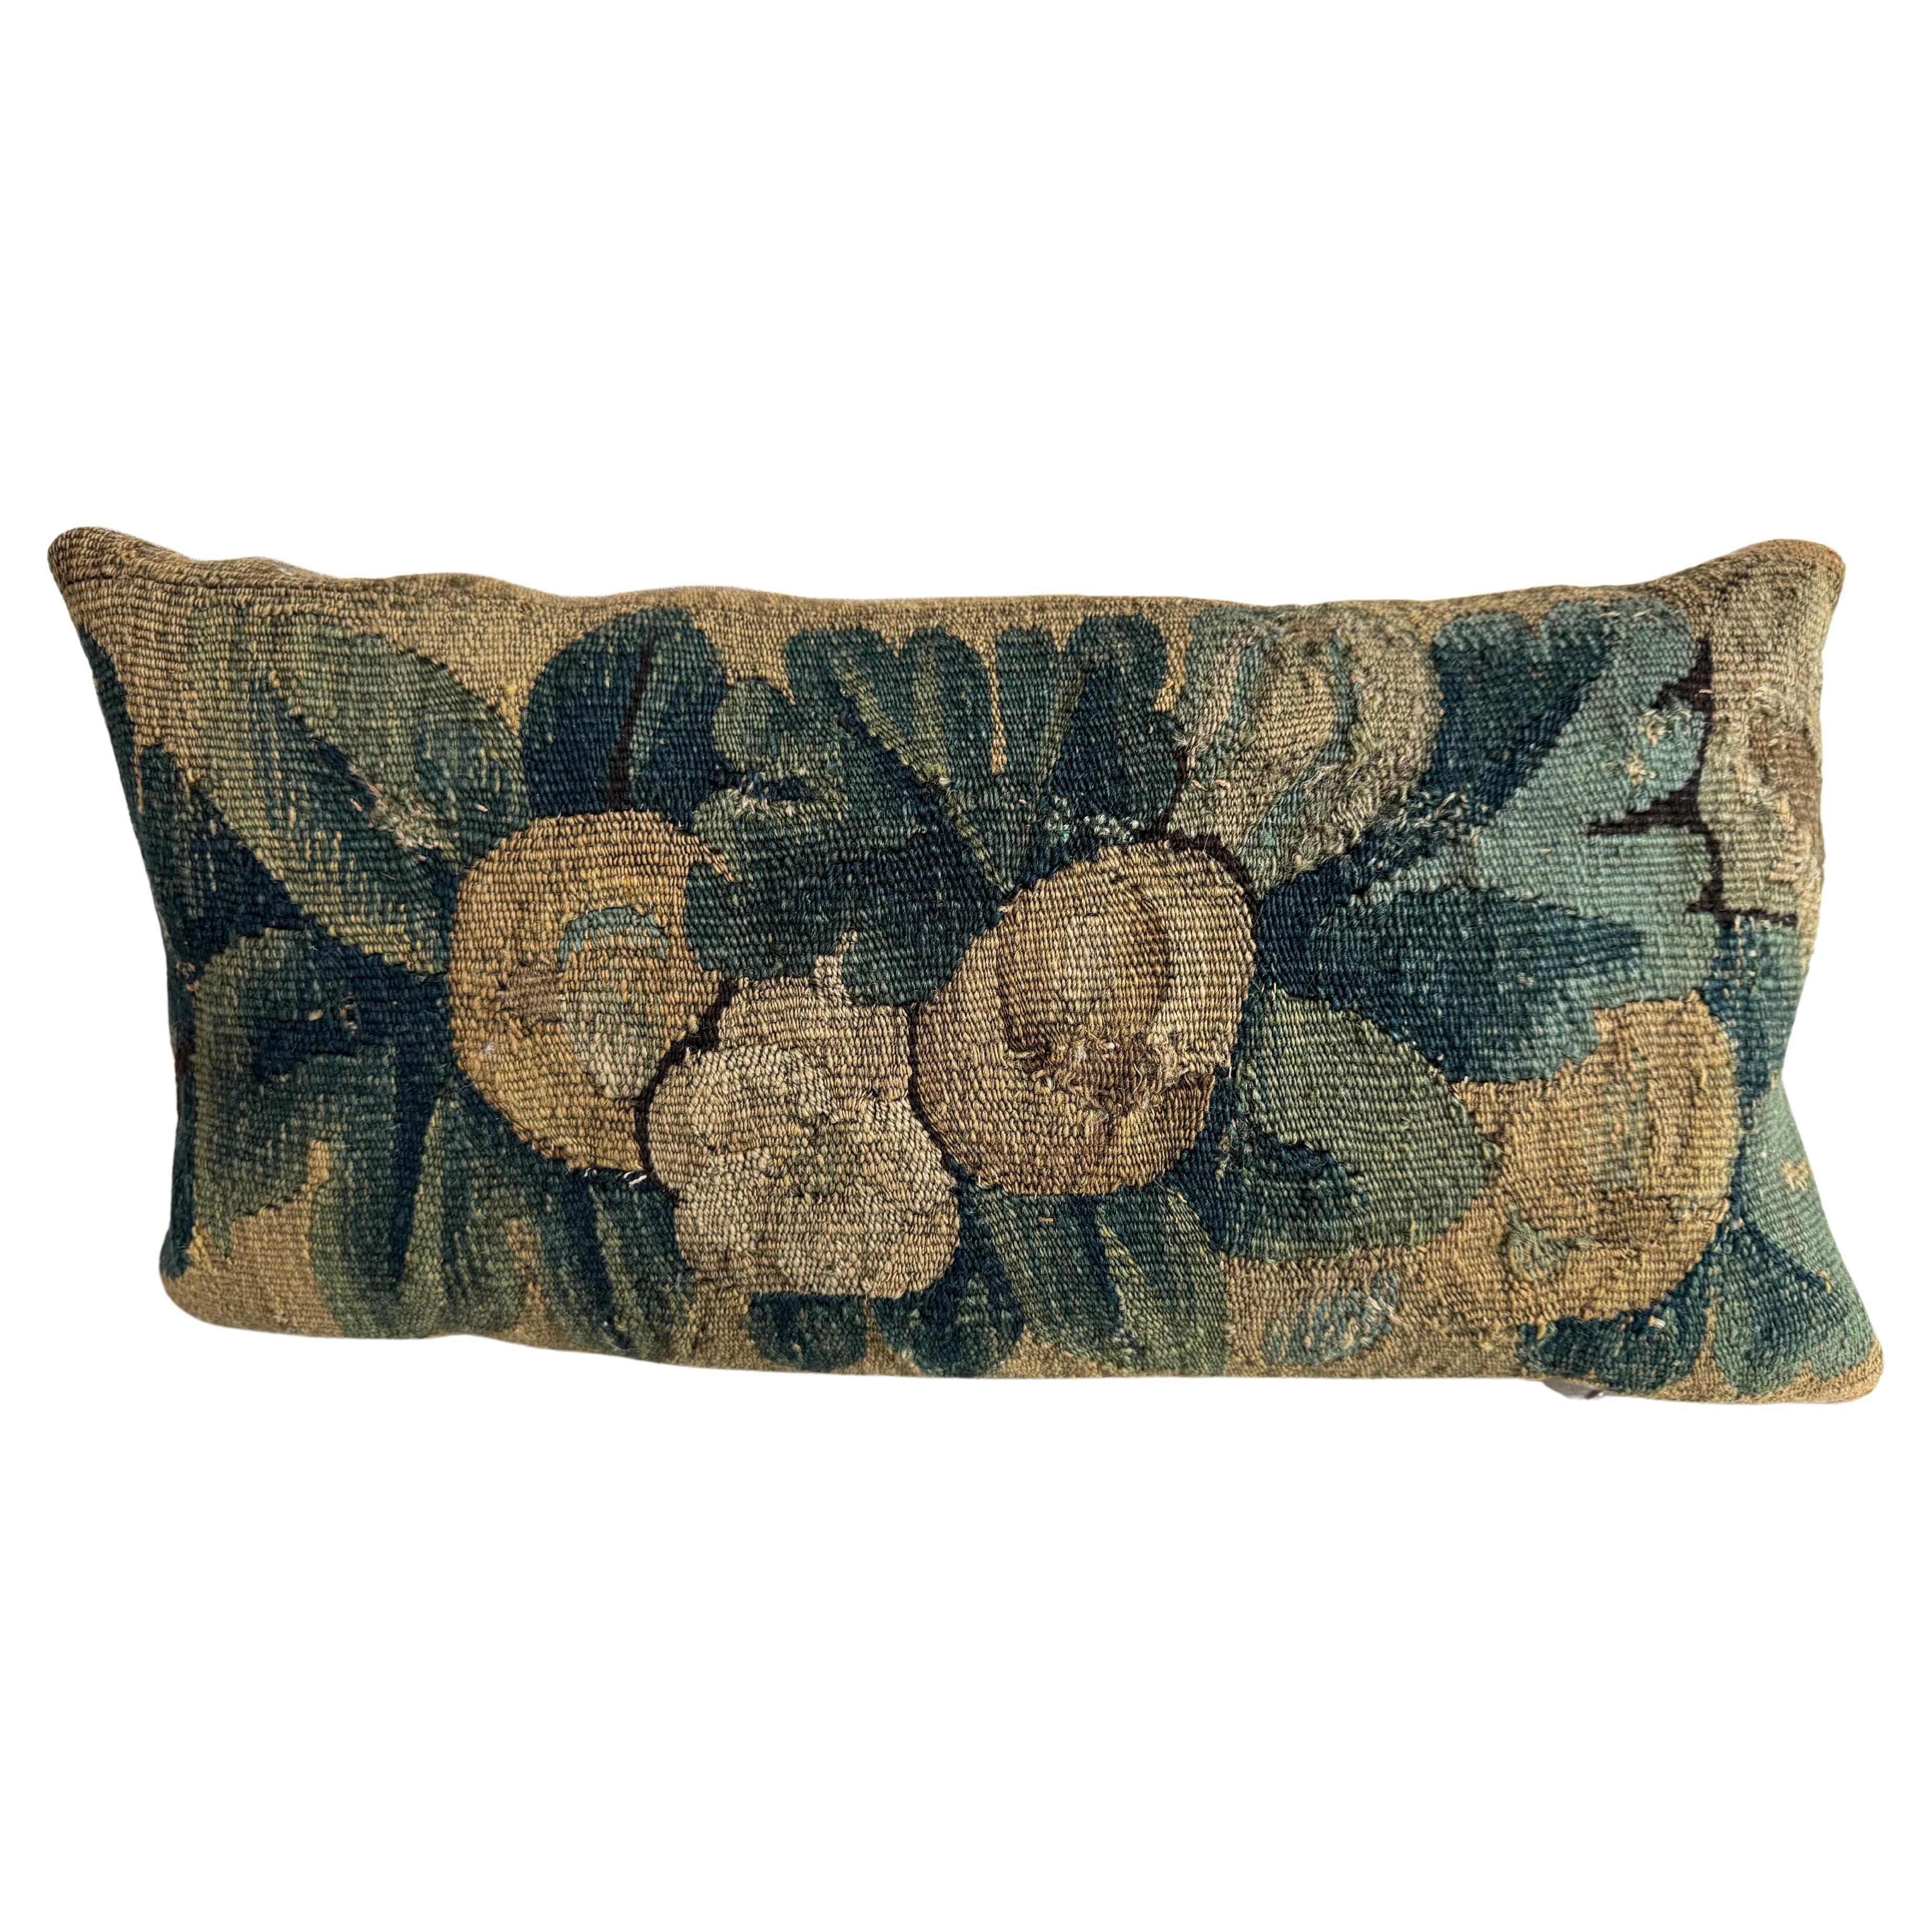 17th Century Flemish Pillow - 20" x 10"